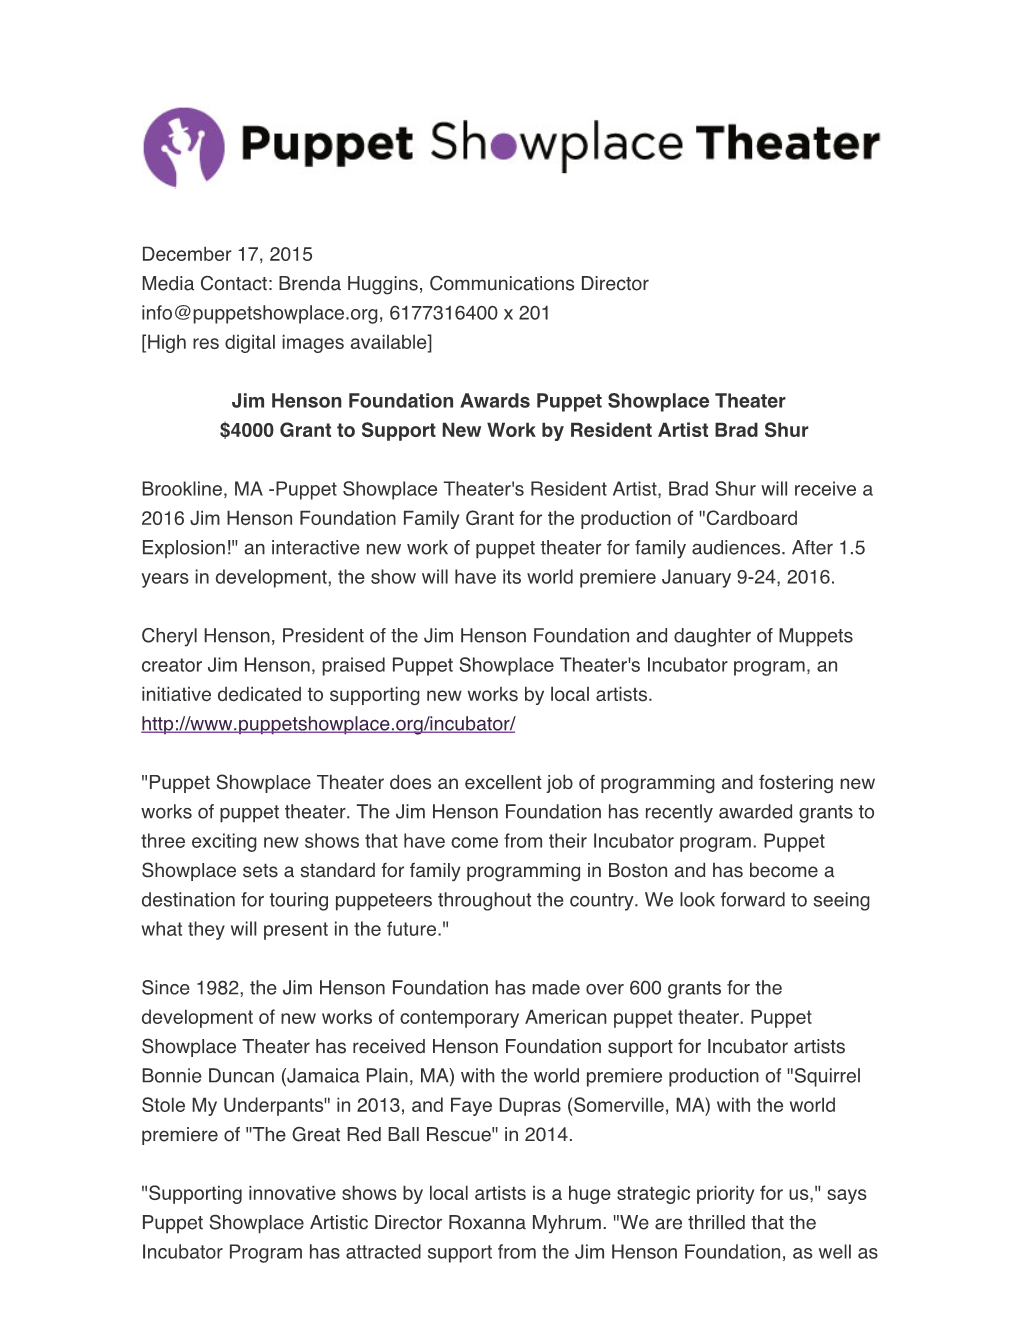 Jim Henson Foundation Awards Grant to Boston Puppeteer